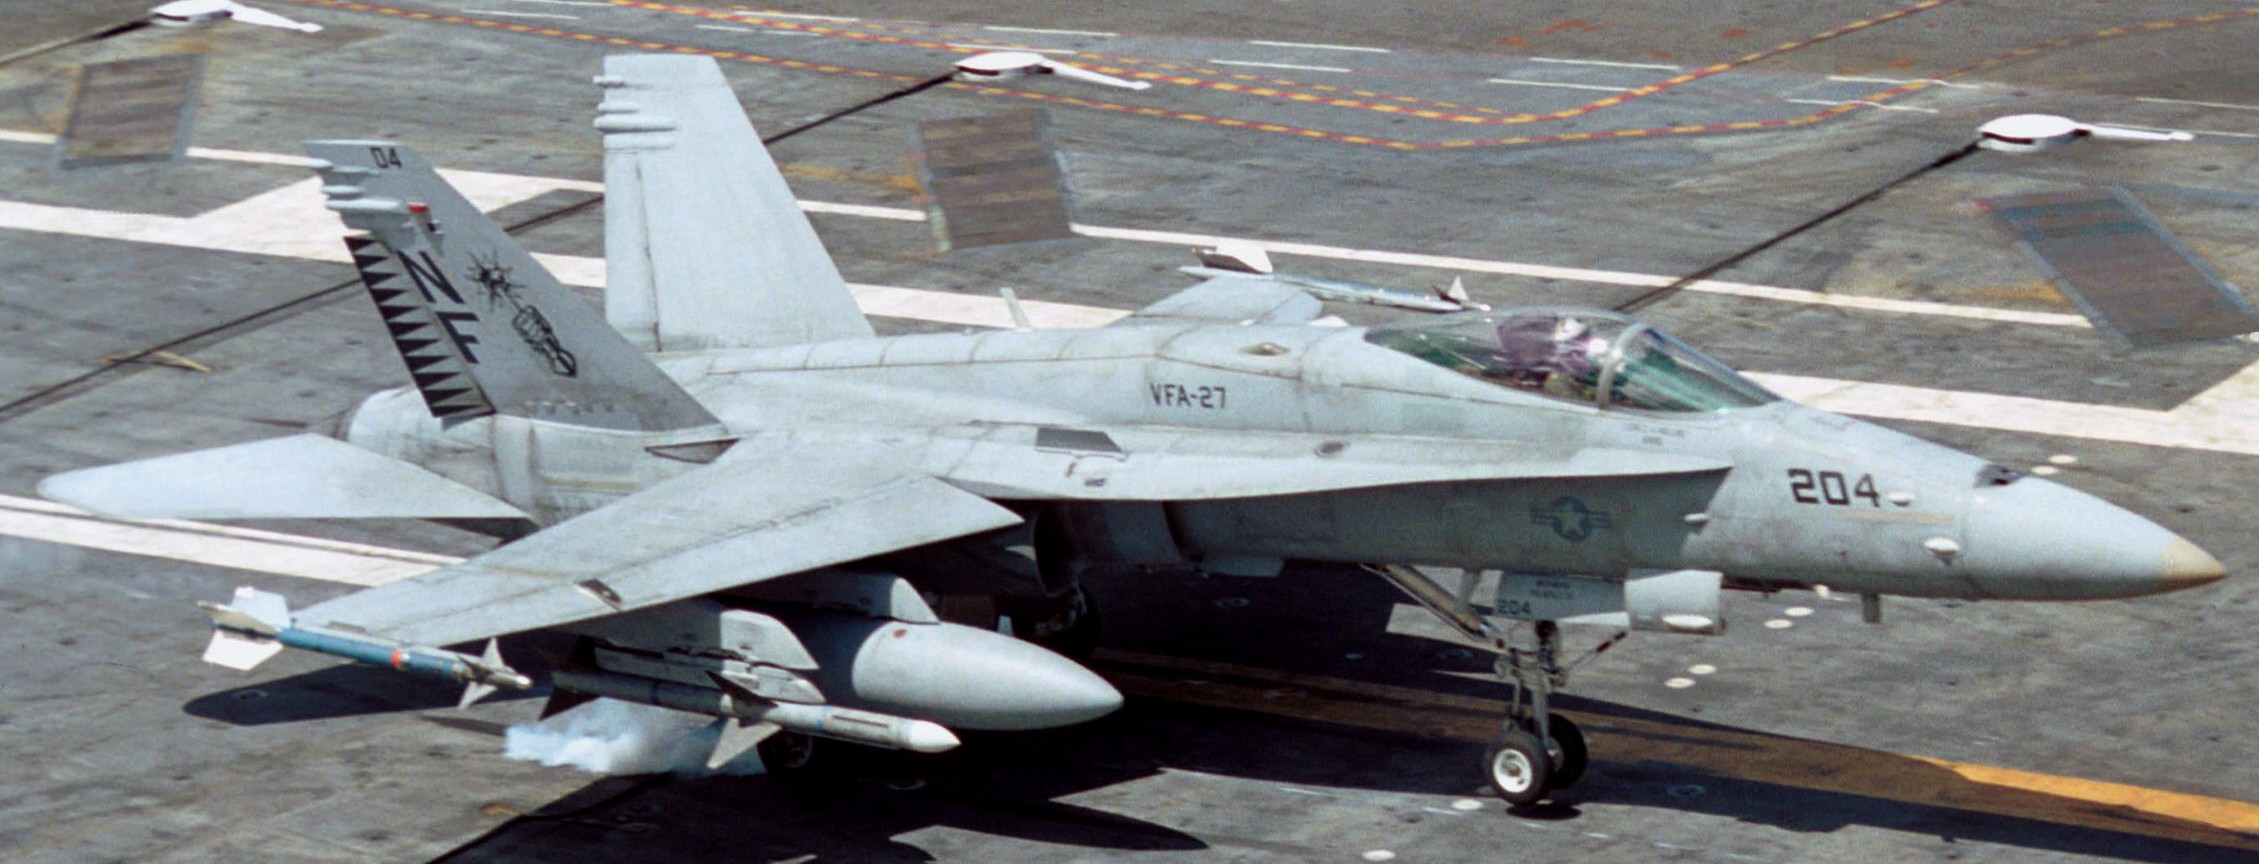 vfa-27 royal maces strike fighter squadron f/a-18c hornet cv-63 uss kitty hawk cvw-5 us navy 05